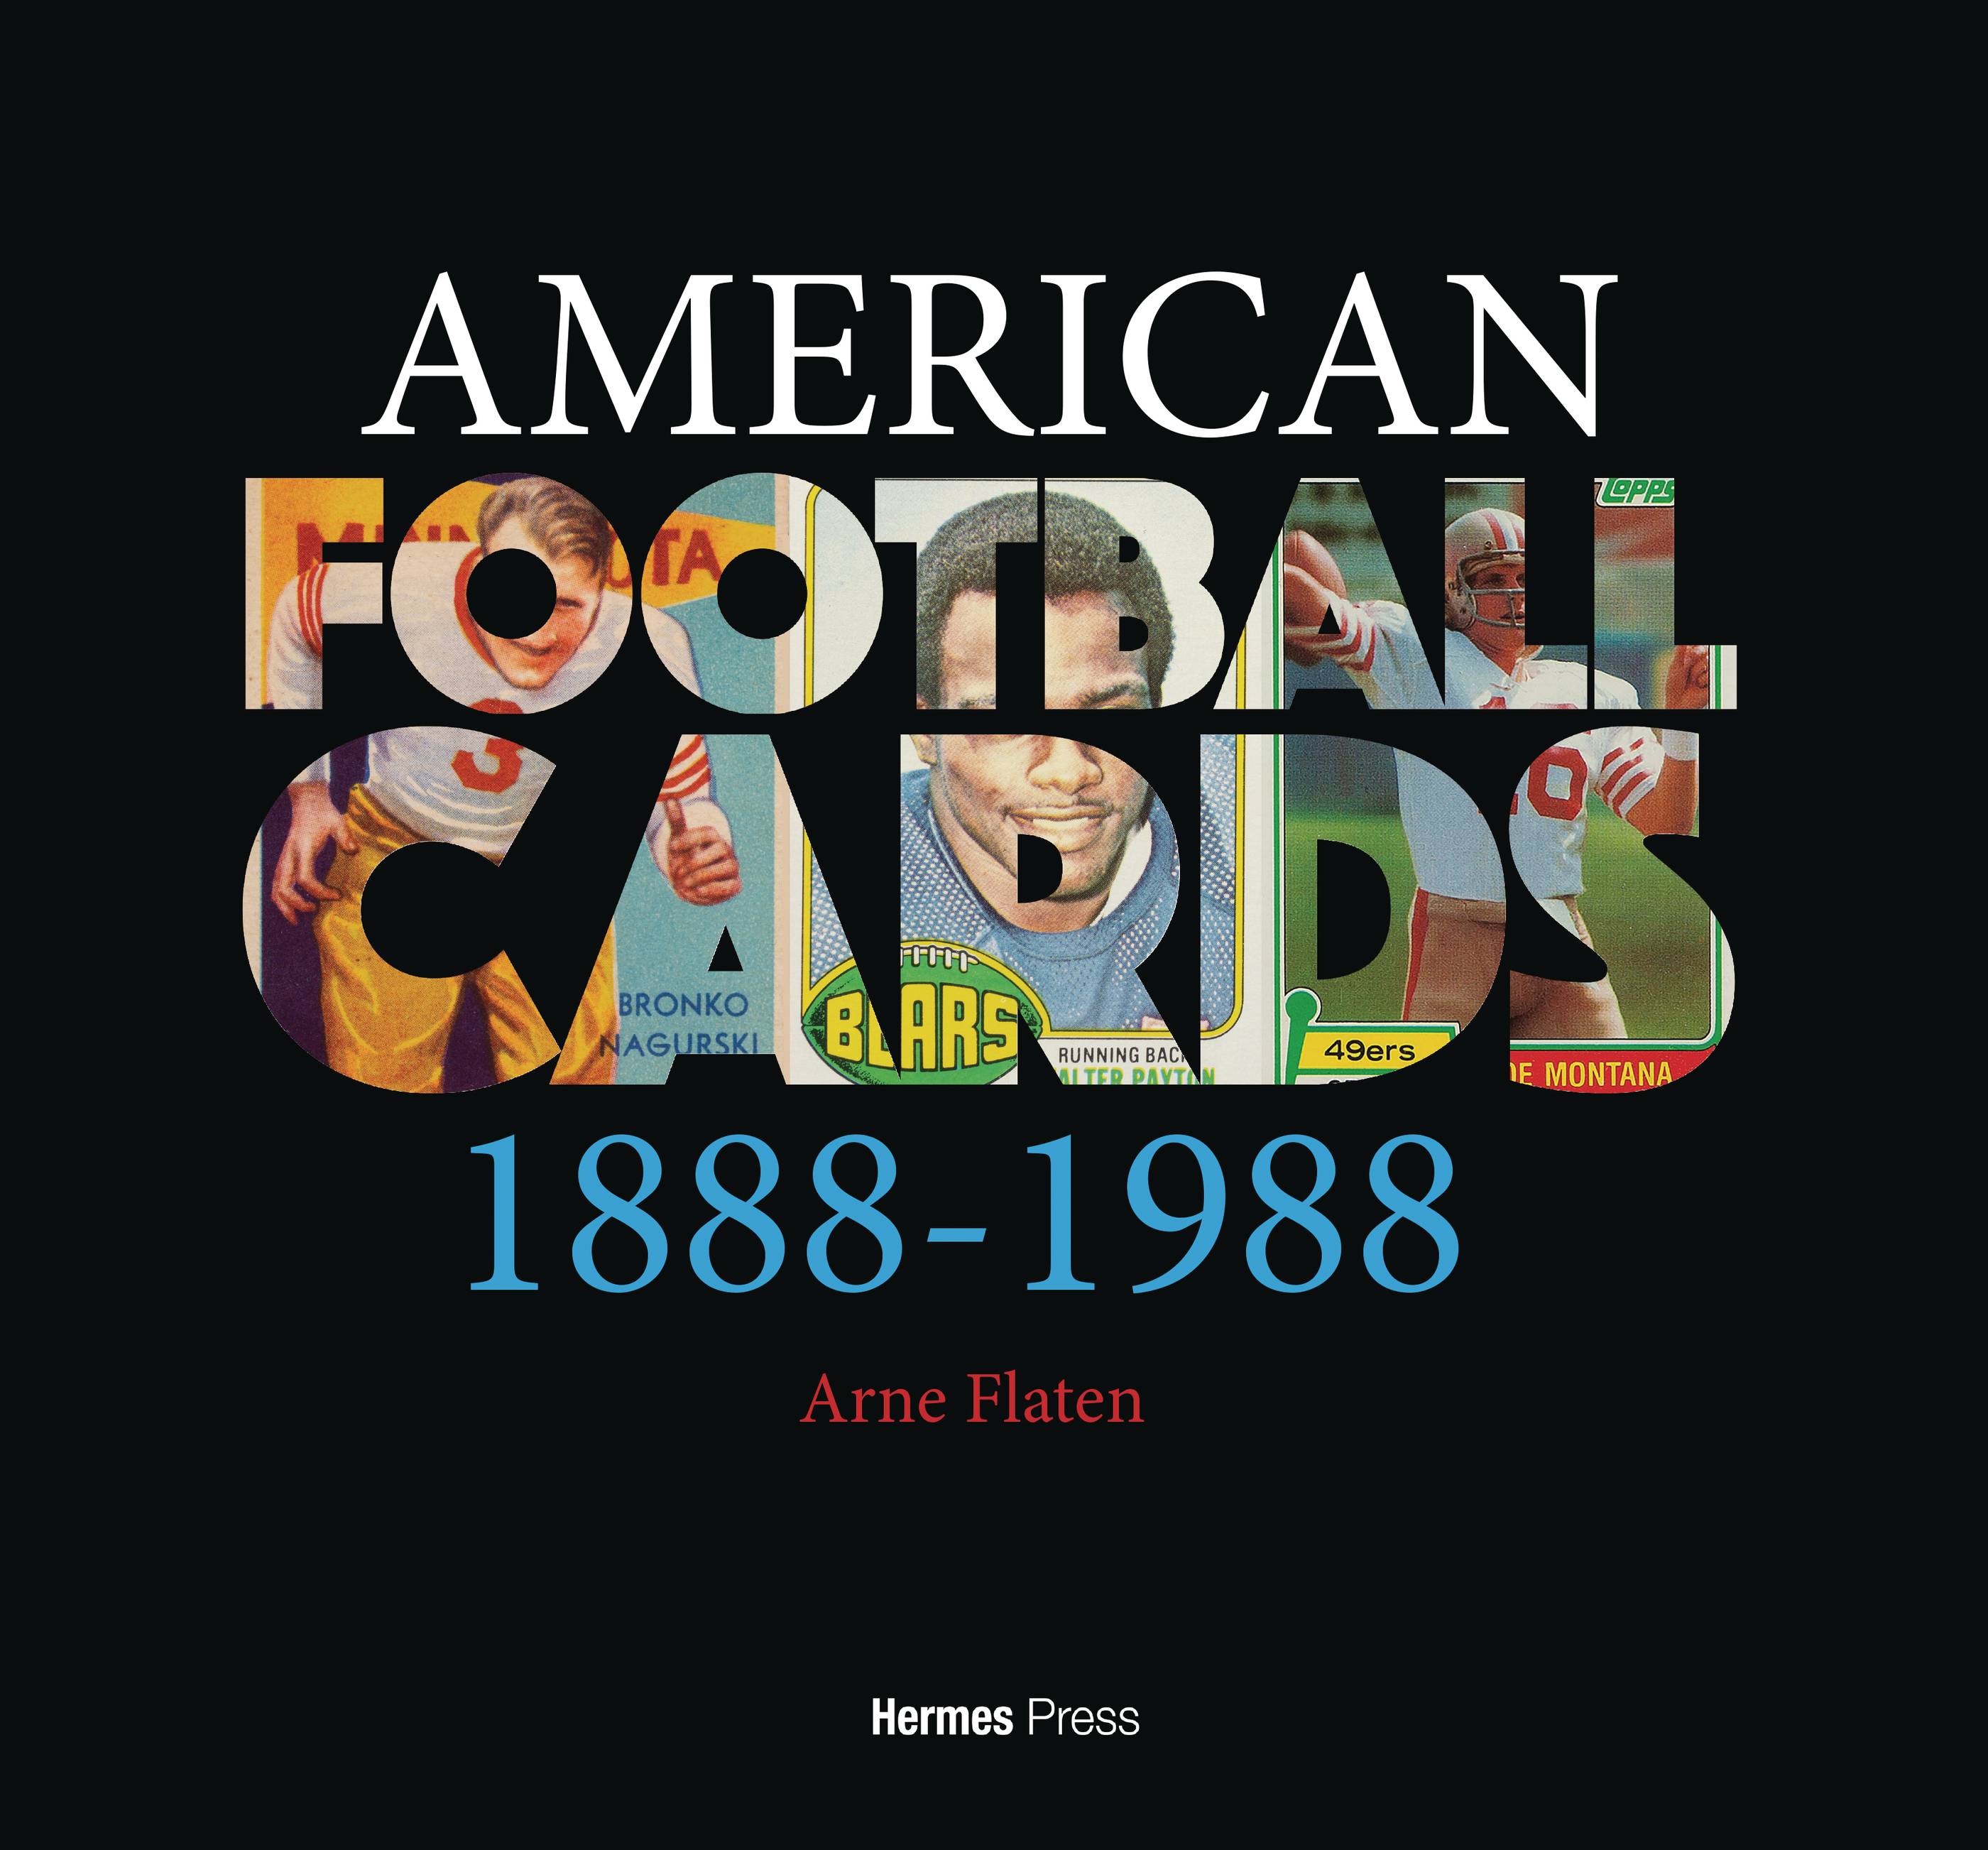 AMERICAN FOOTBALL CARDS 1888-1988 HC